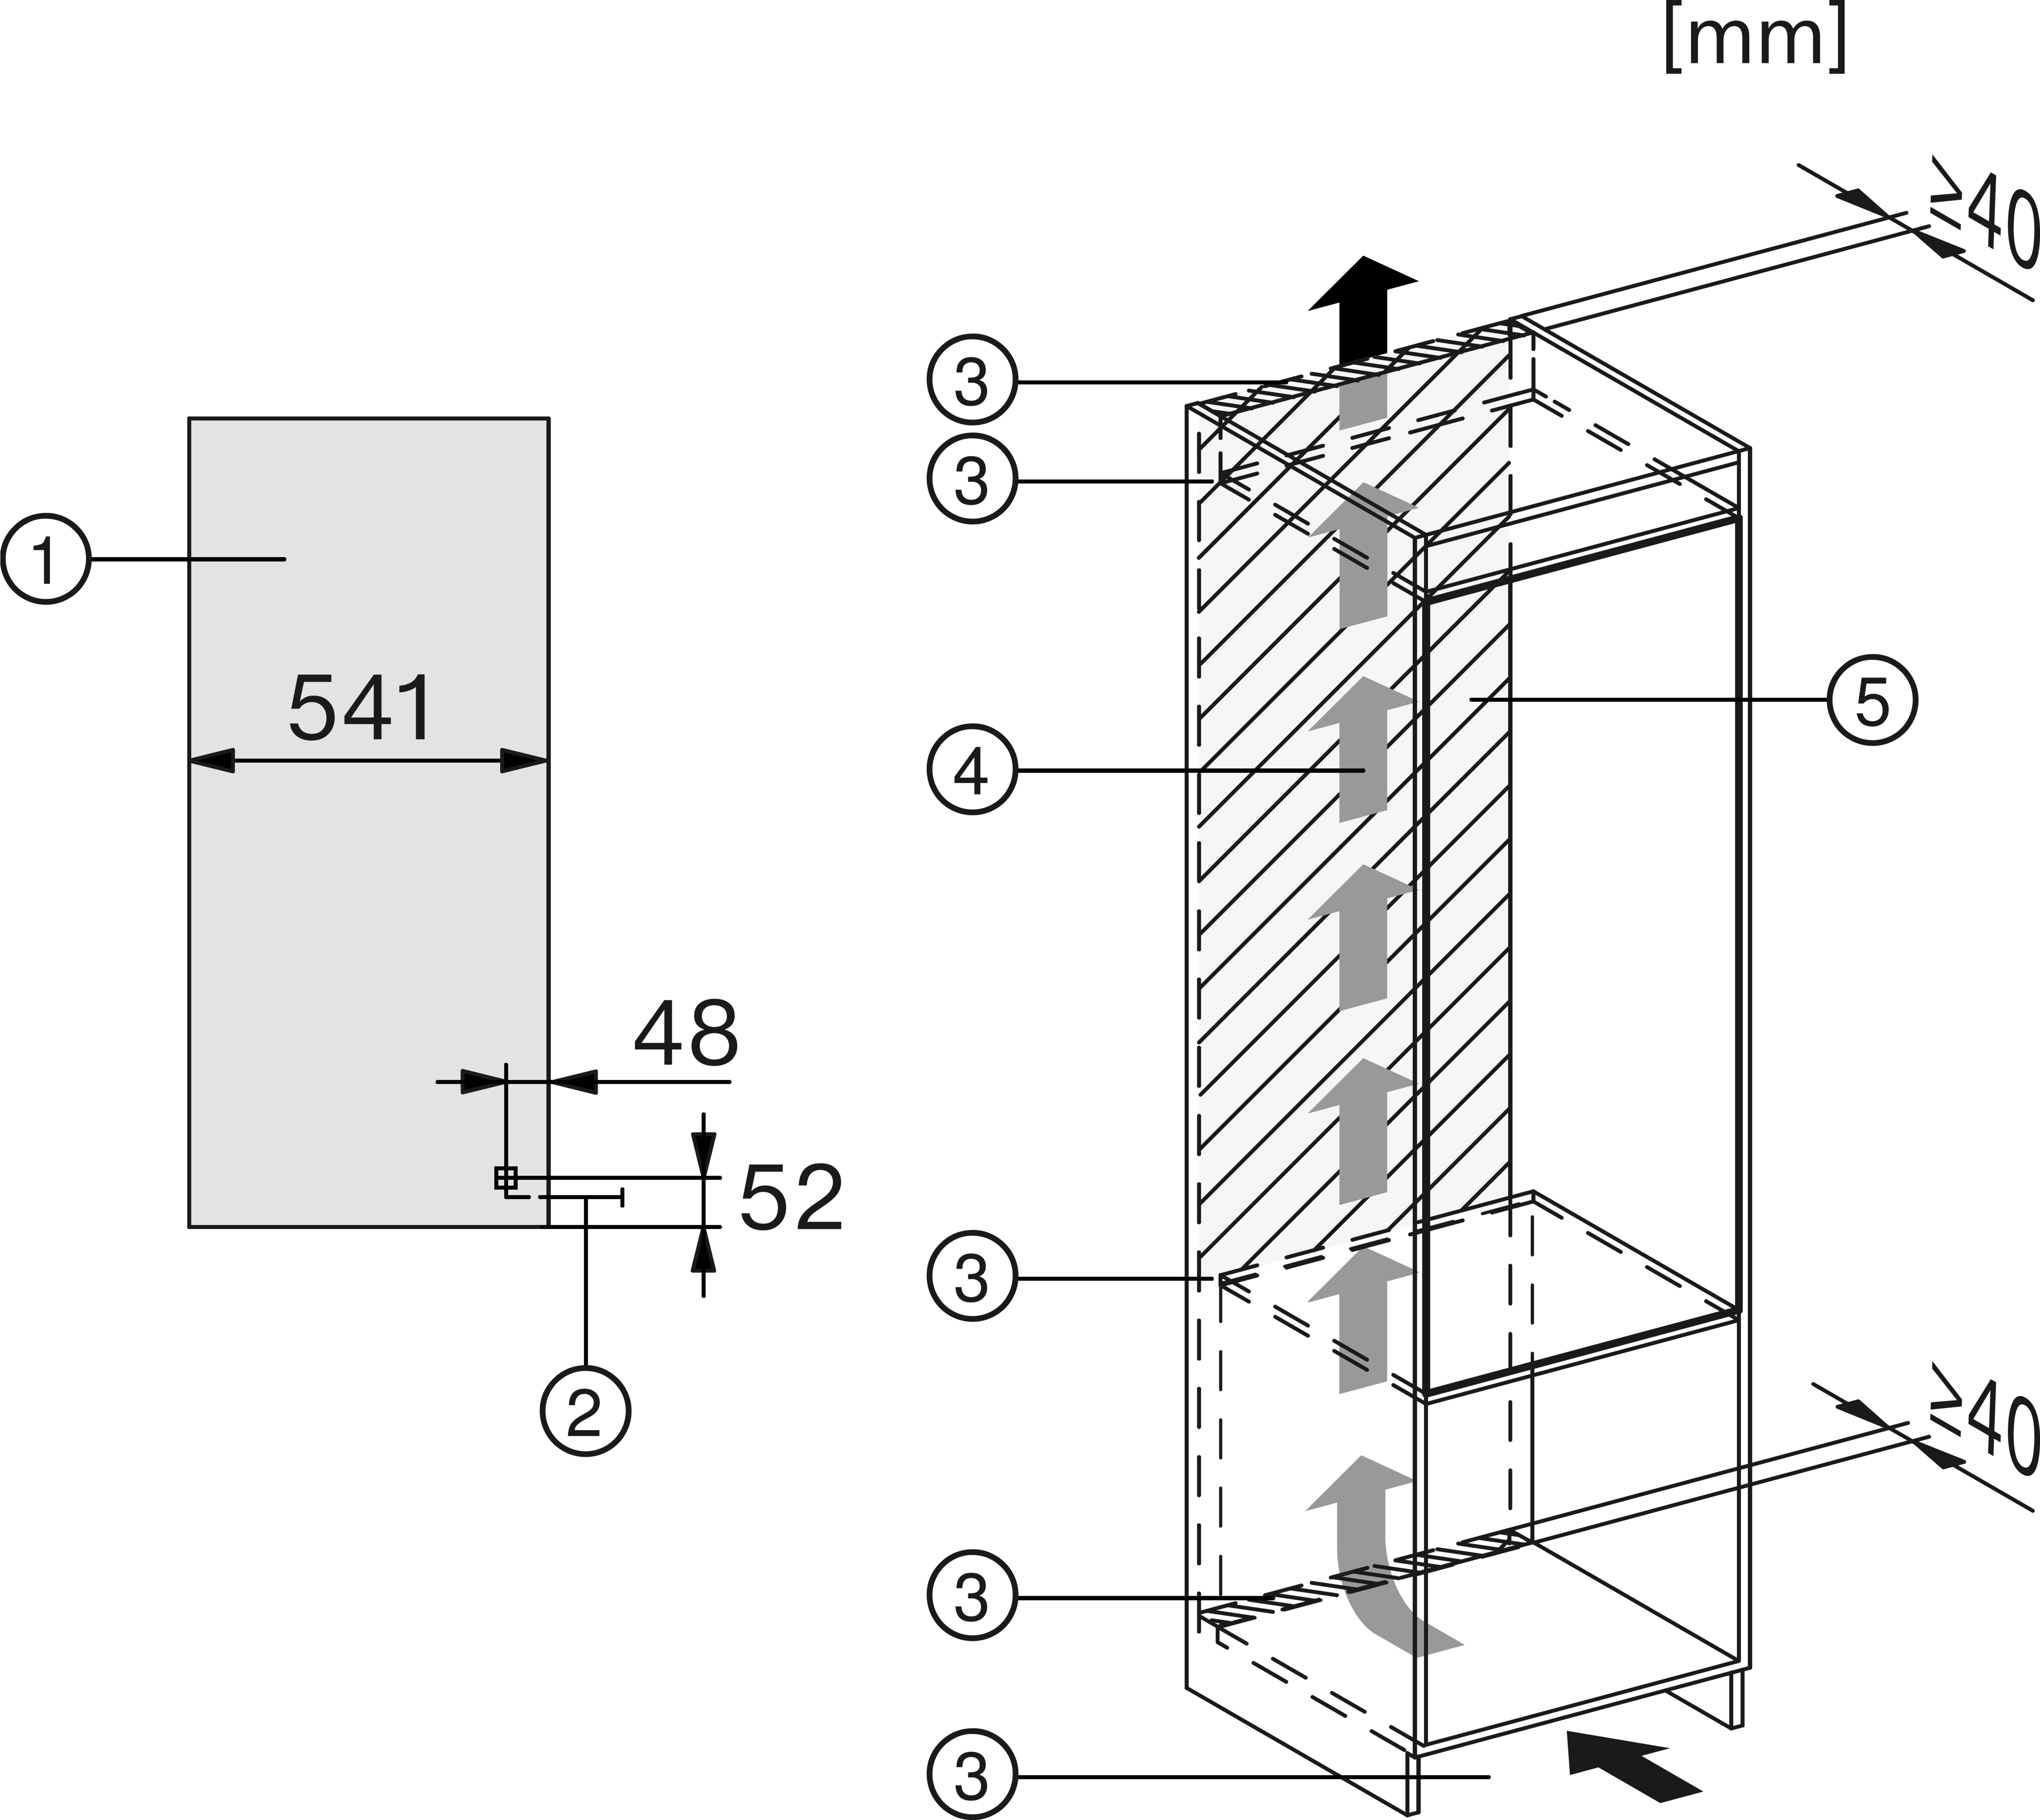 Maattekening MIELE koelkast inbouw K7315E